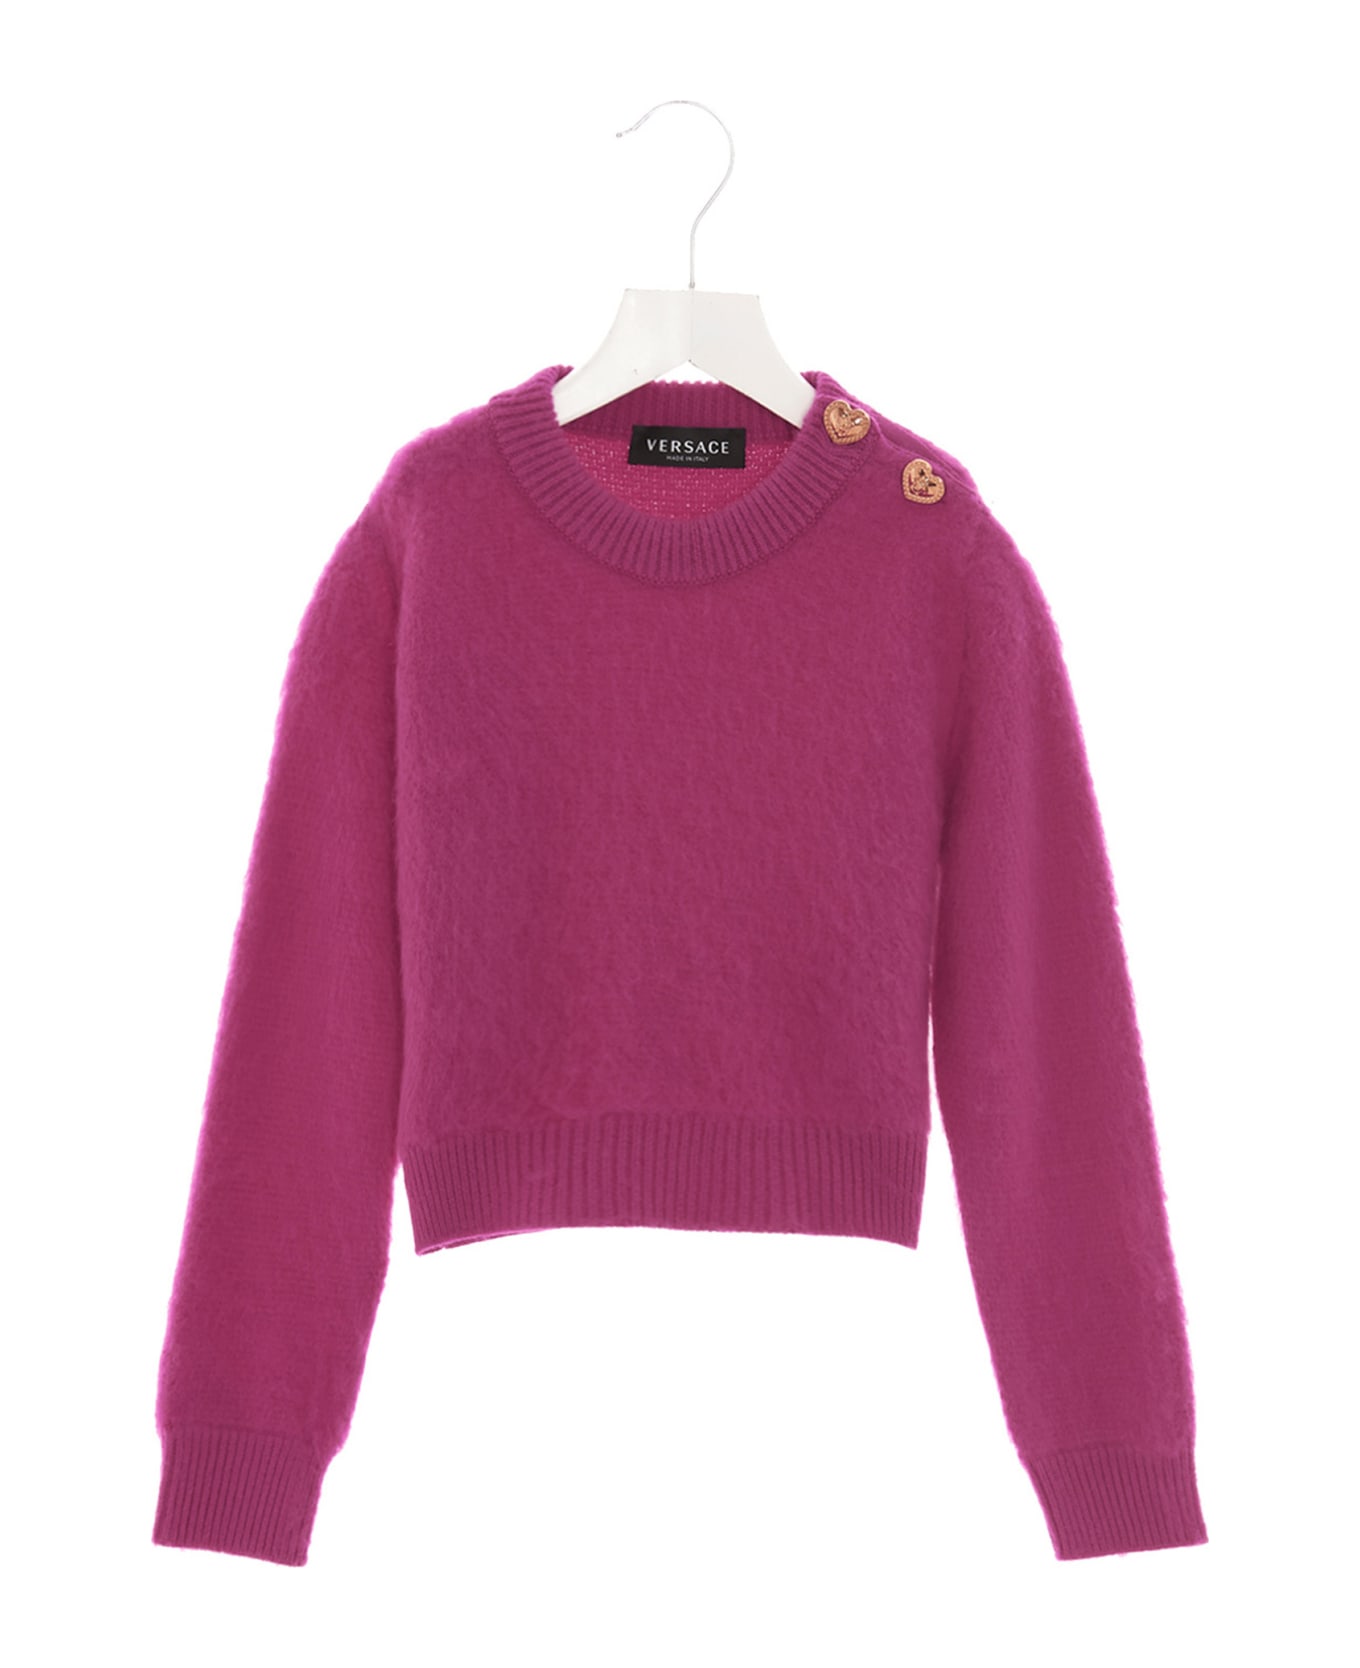 Versace Heart Button Sweater - Fuchsia